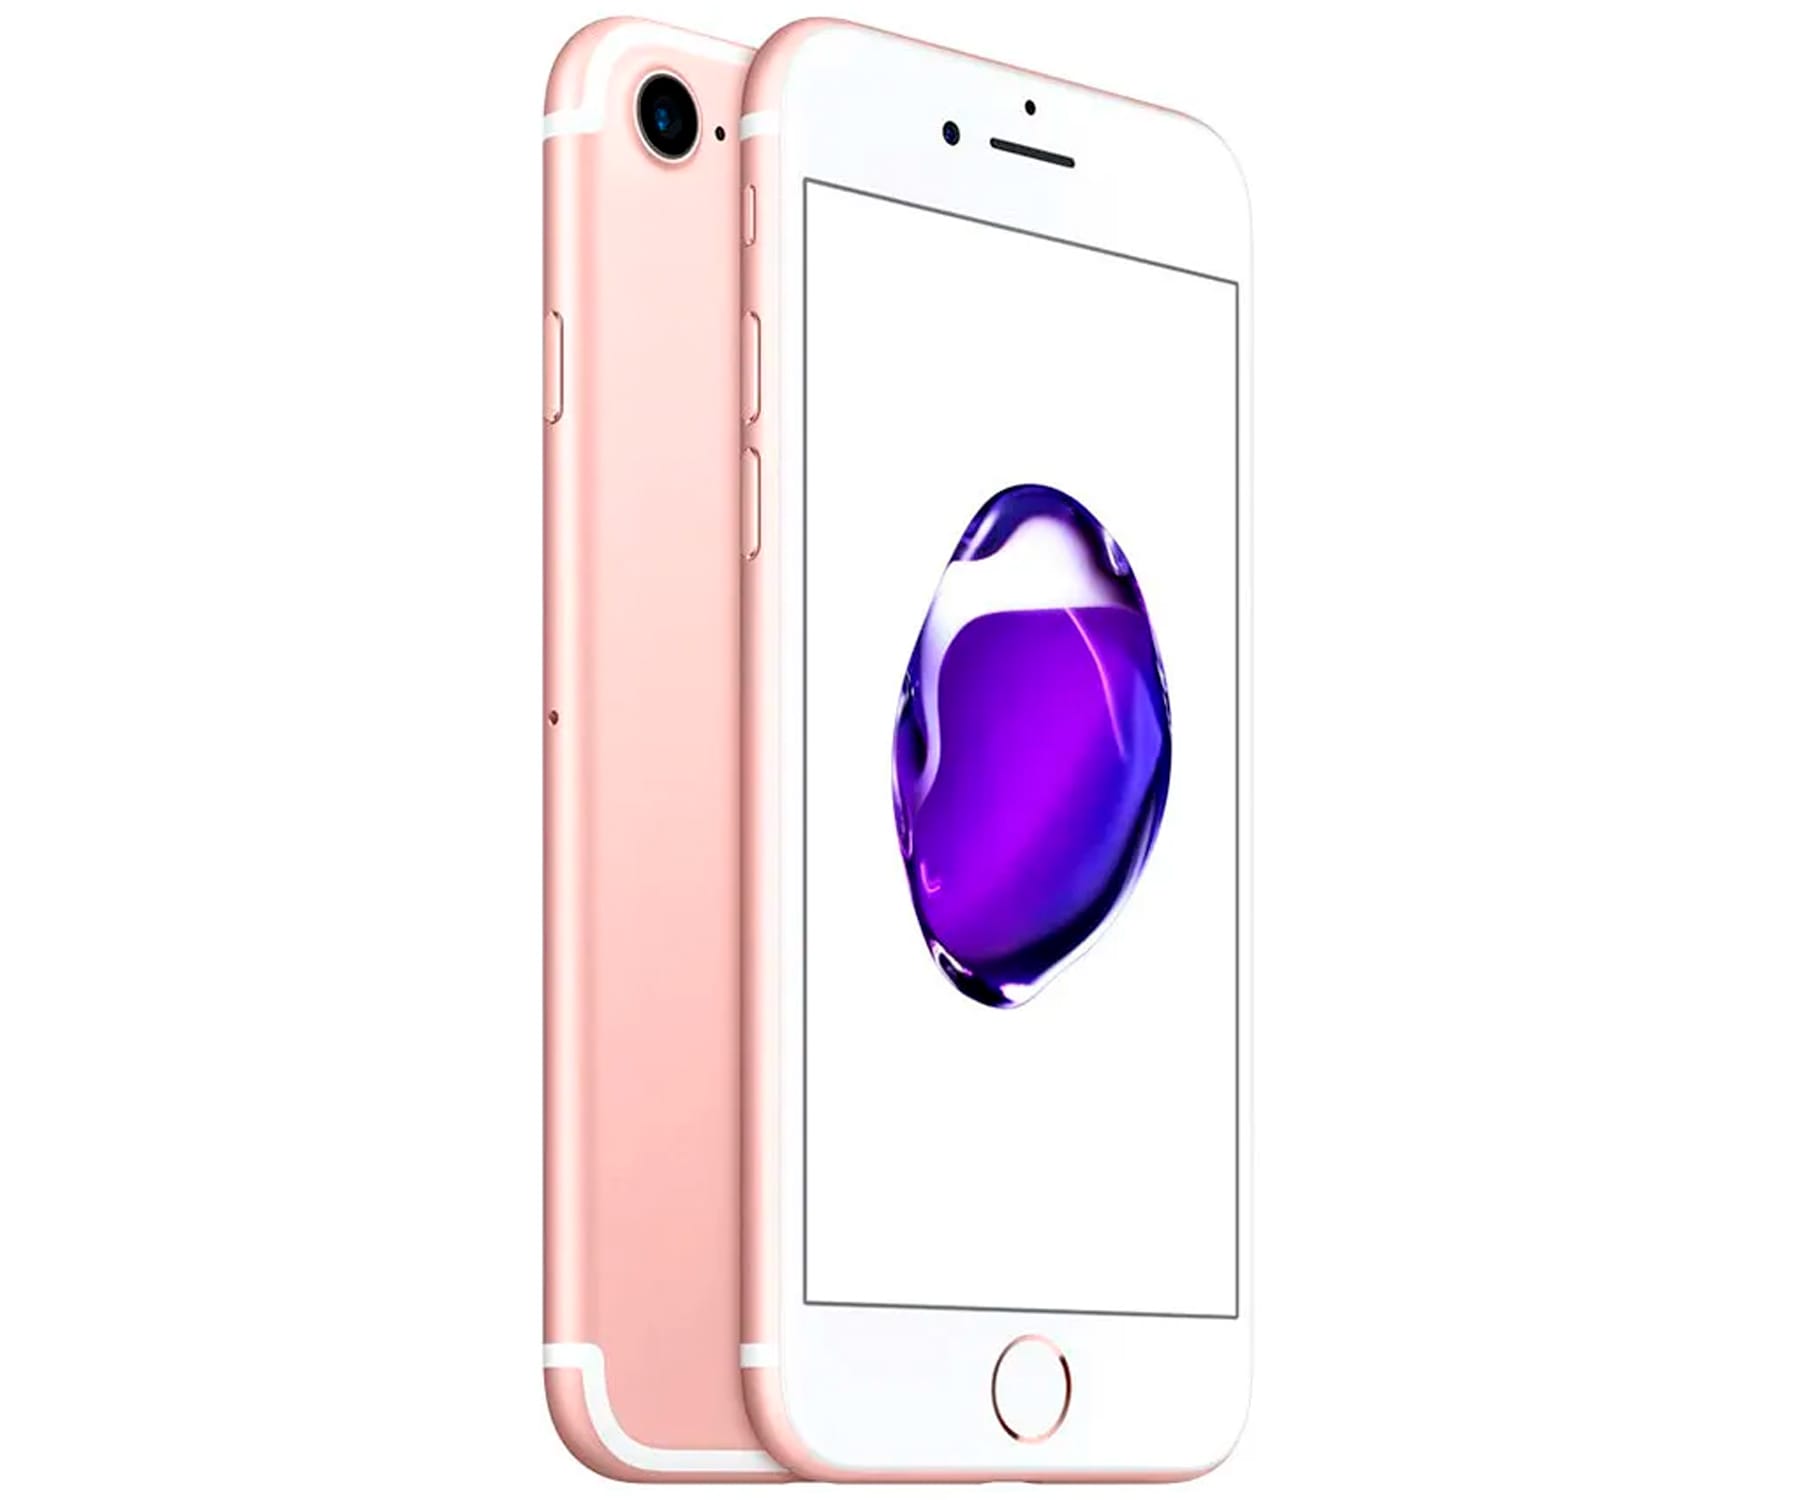 Apple iPhone 13, 256GB, Rosa - (Reacondicionado)